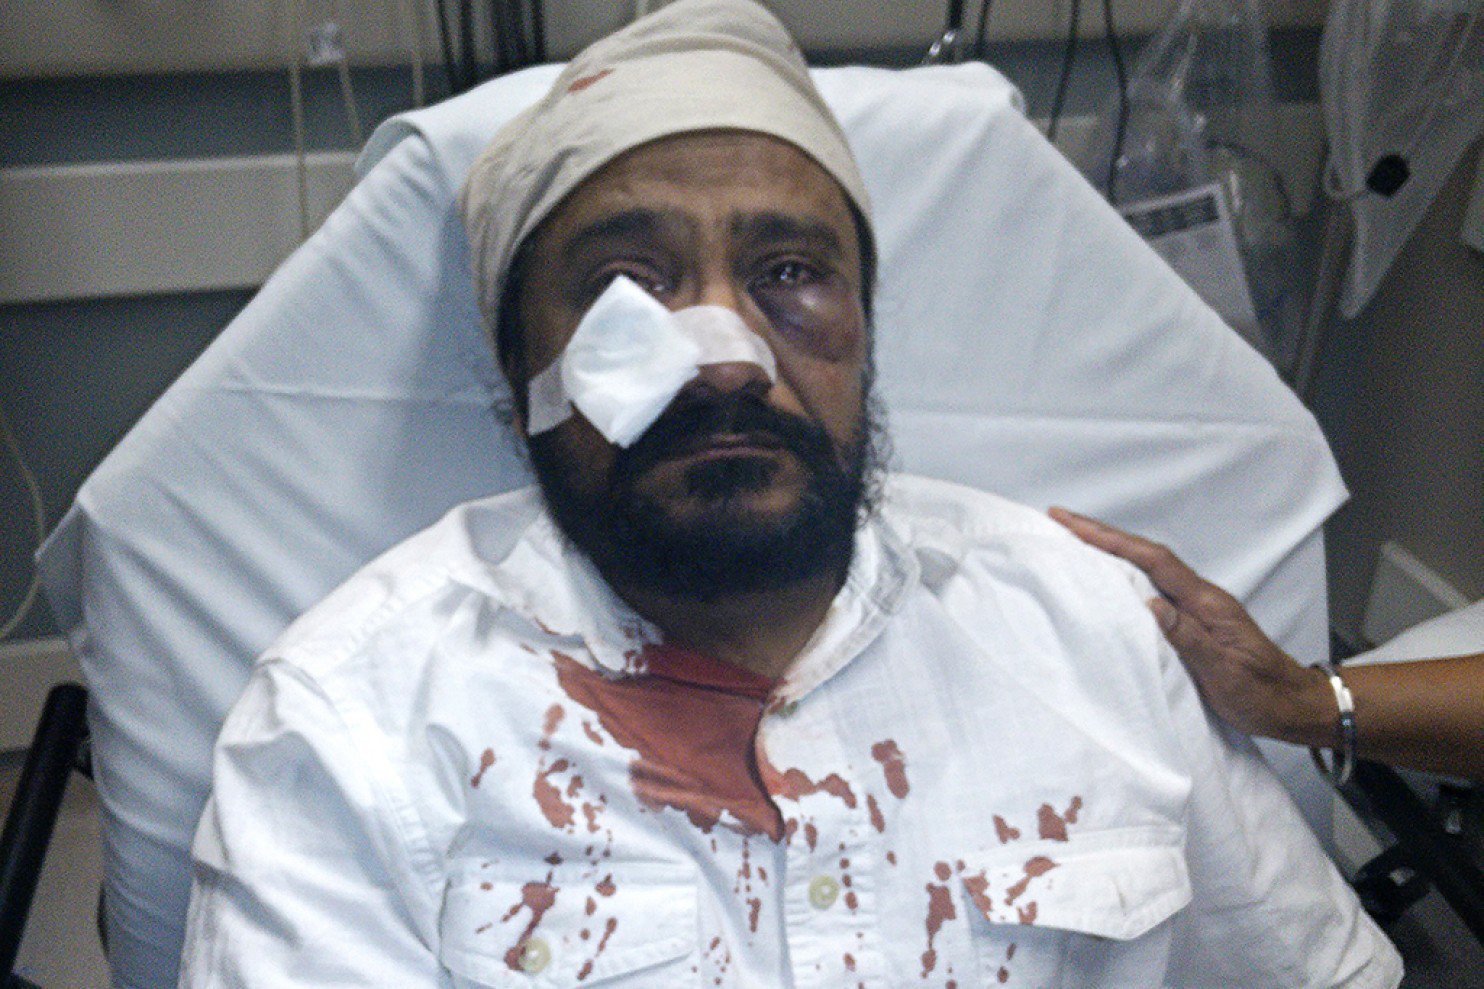 ct-police-investigate-after-sikh-man-called-terrorist-beaten-in-darien-20150910